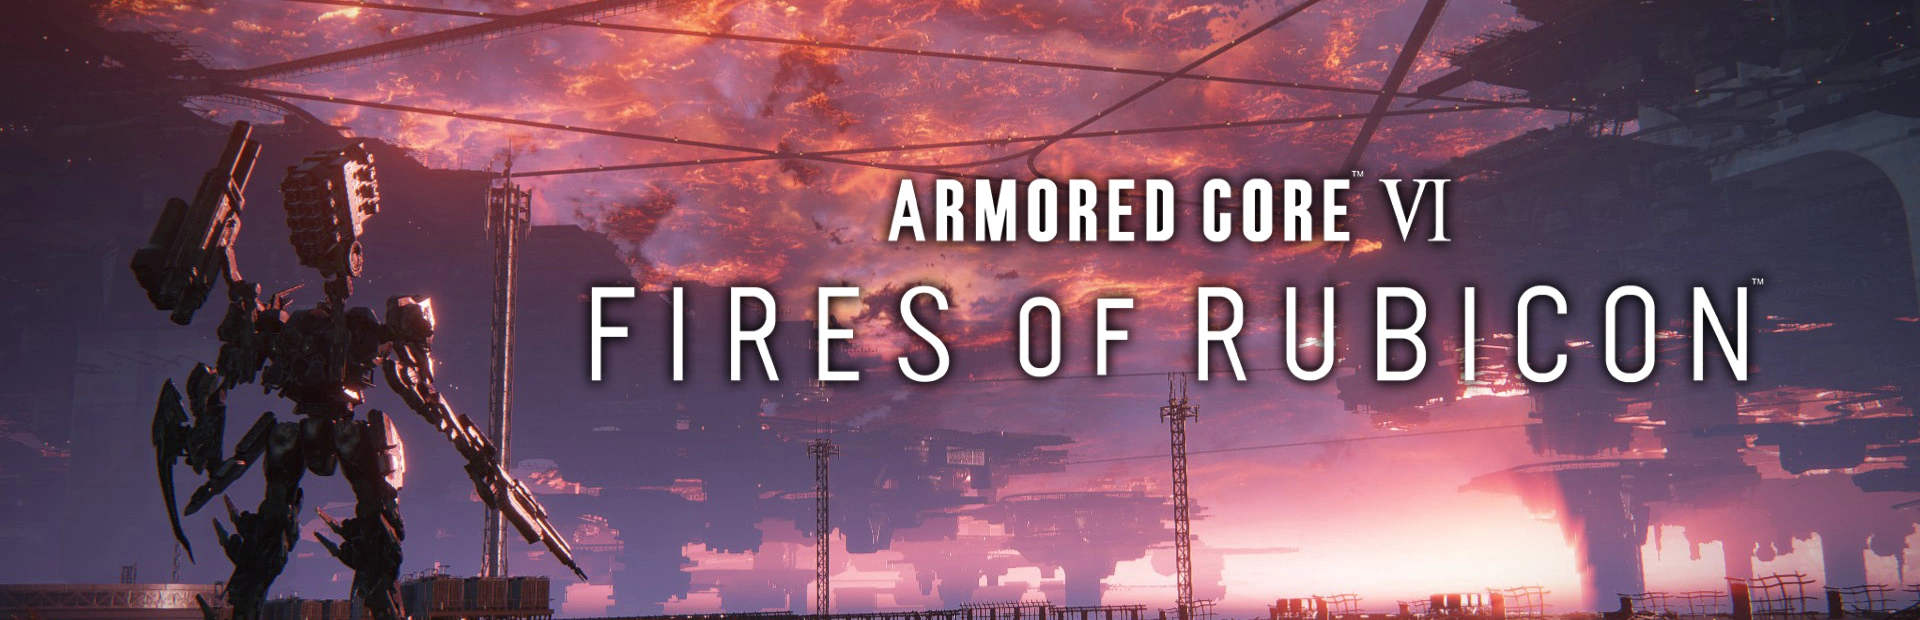 ARMORED.CORE .VI .FIRES .OF .RUBICON.banner2